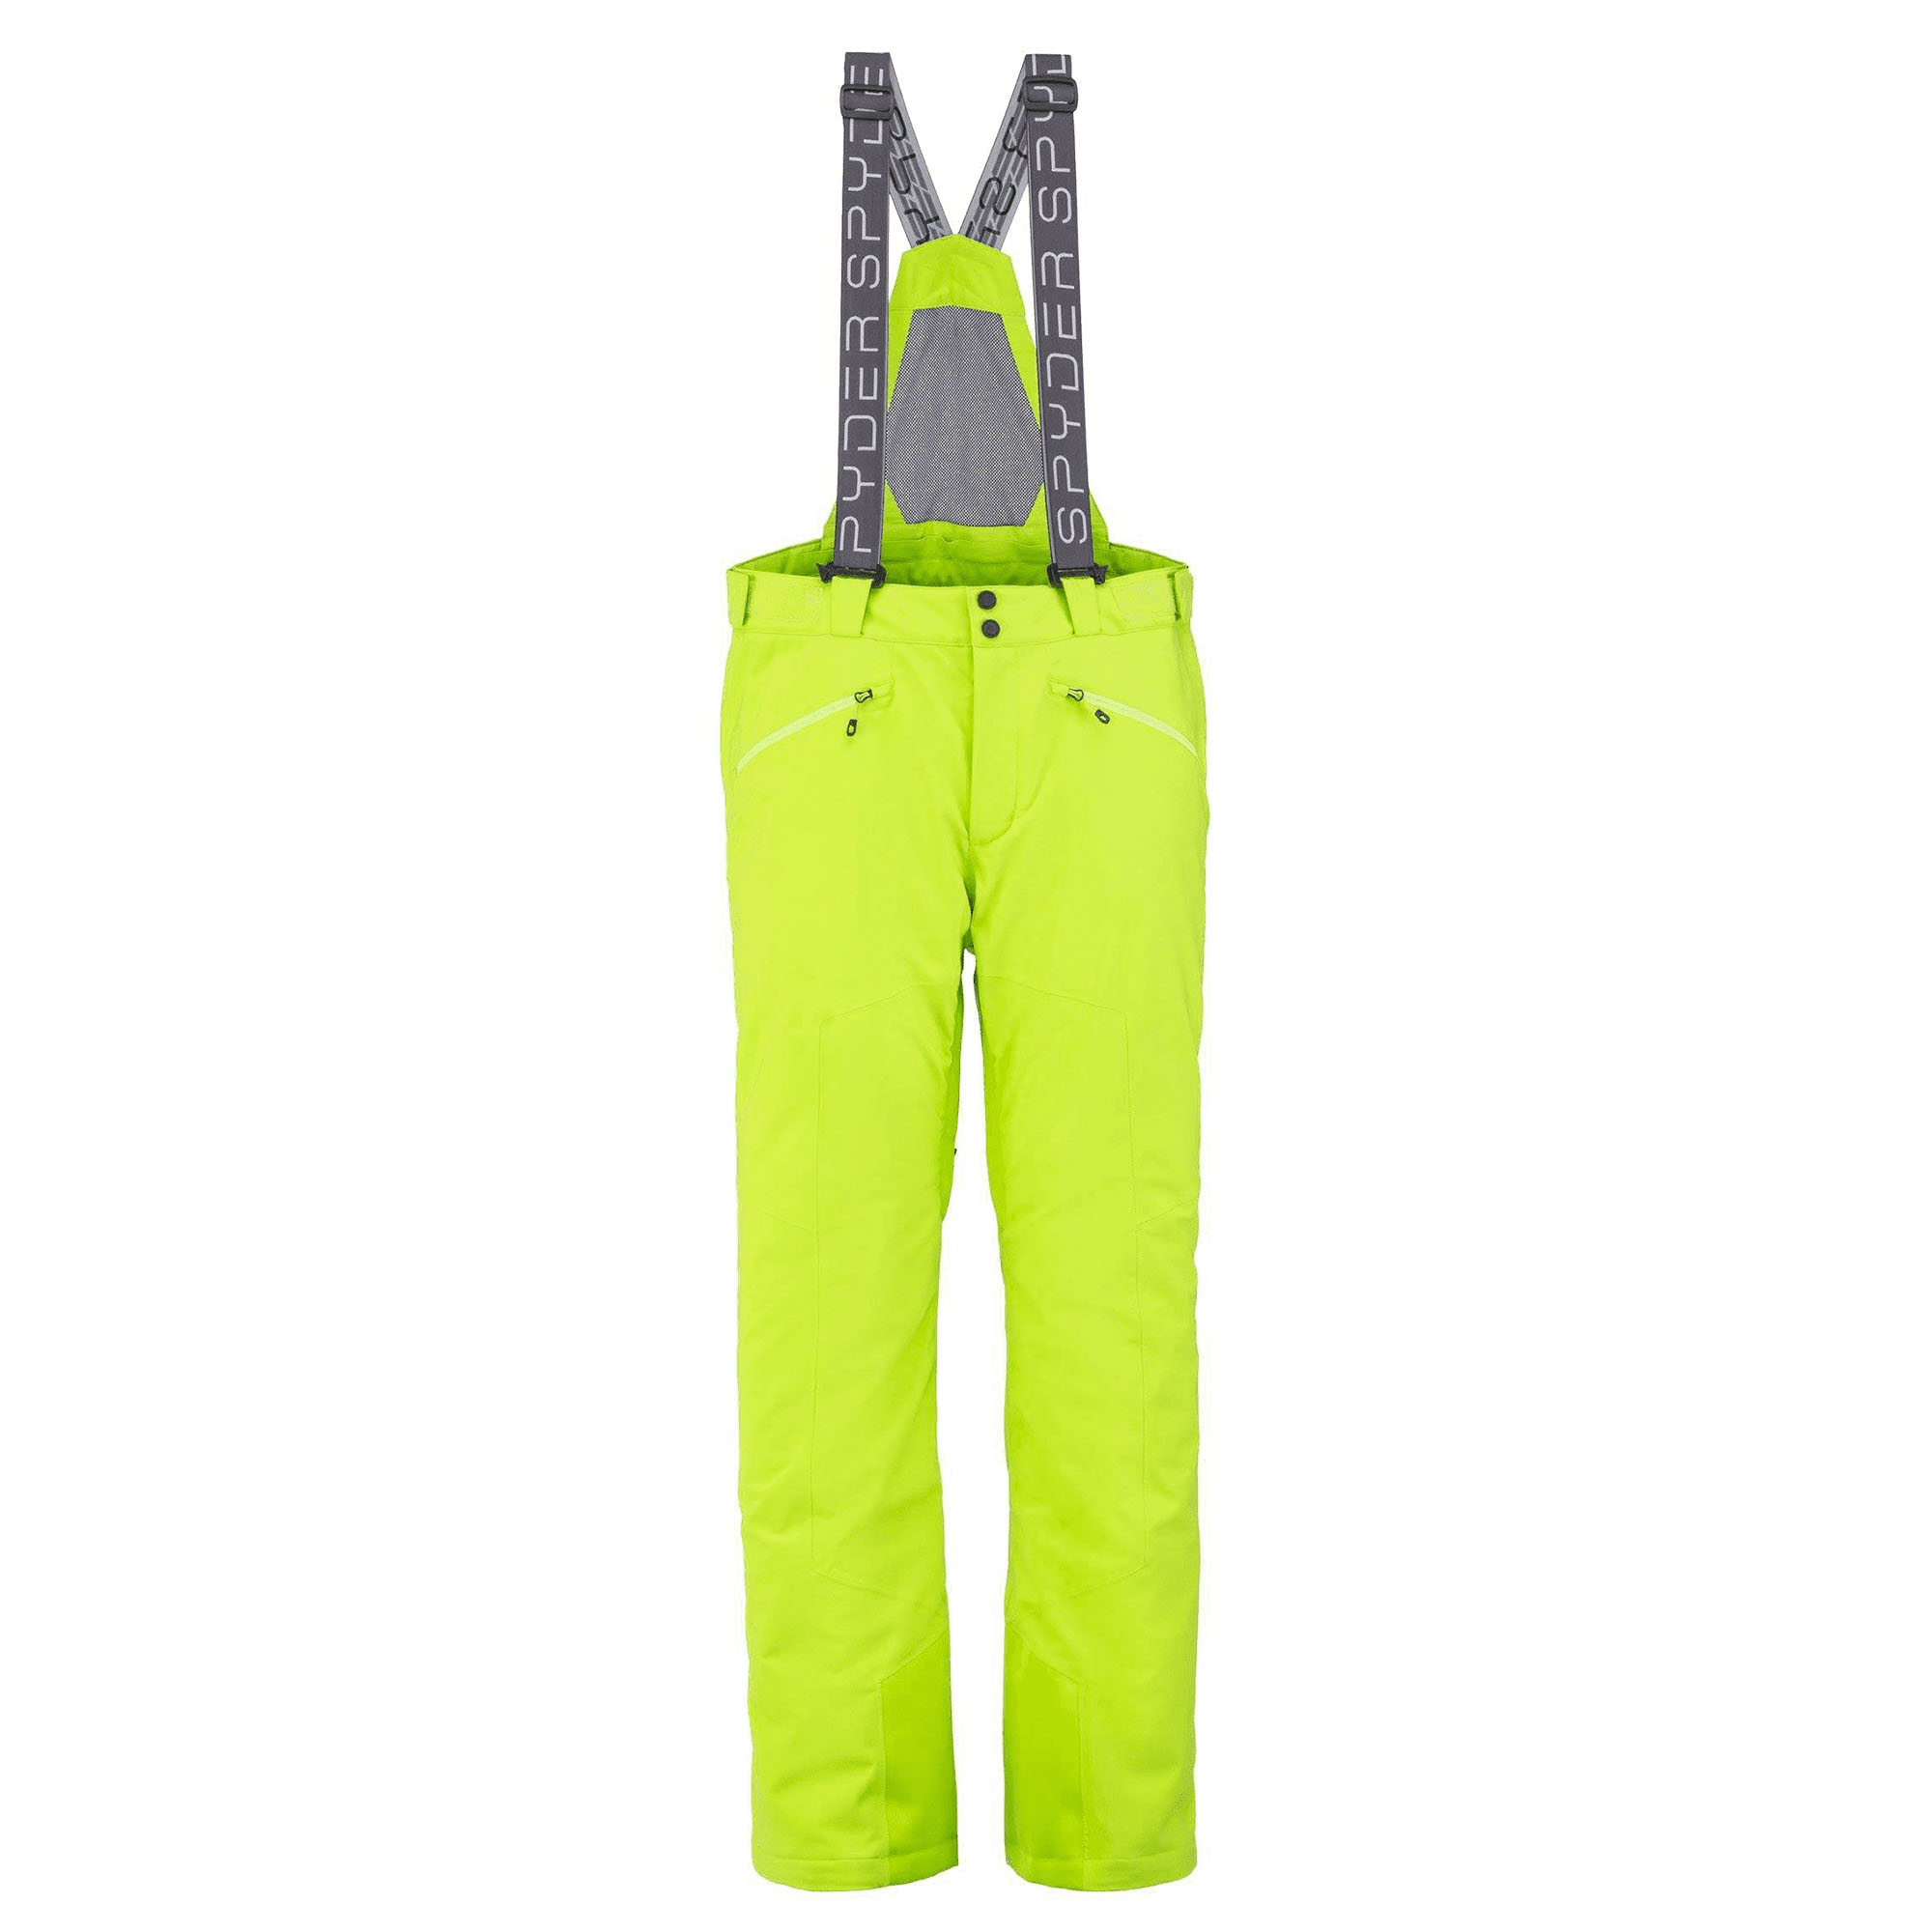 Outdoor Snow Pants for Winter Weather Spyder Men’s Sentinel Gore-Tex Ski Pant